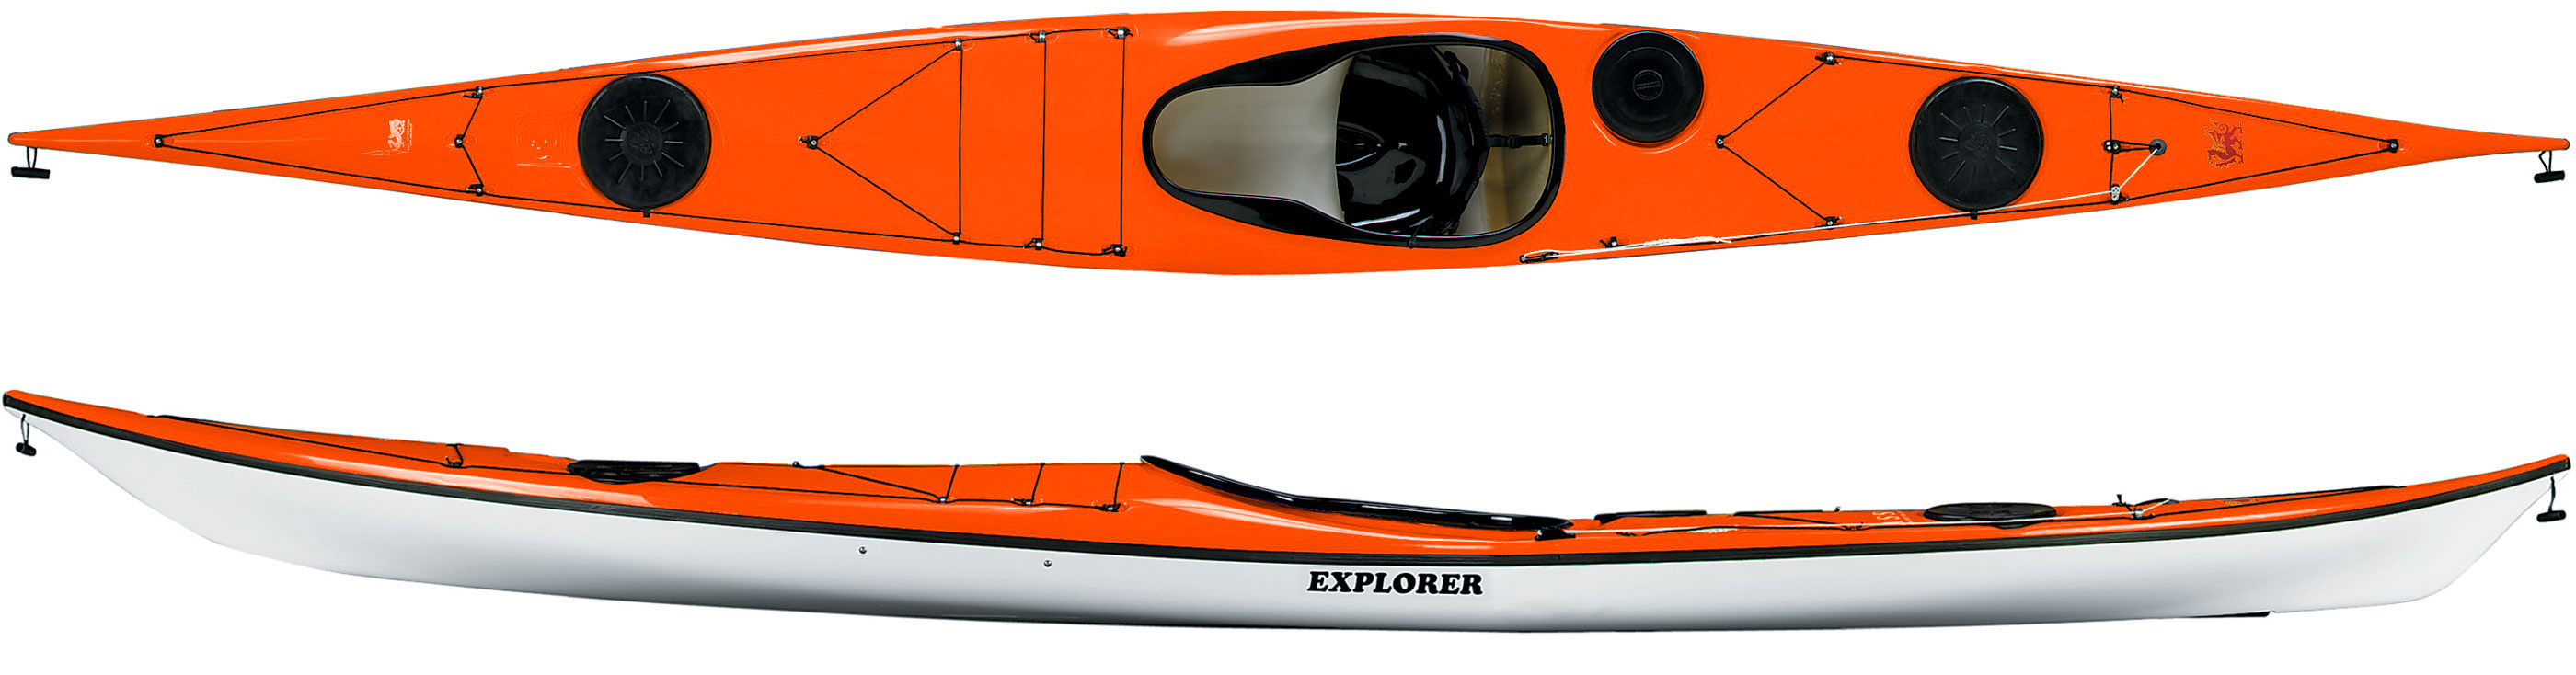 NDKExplorer composite  sea kayak